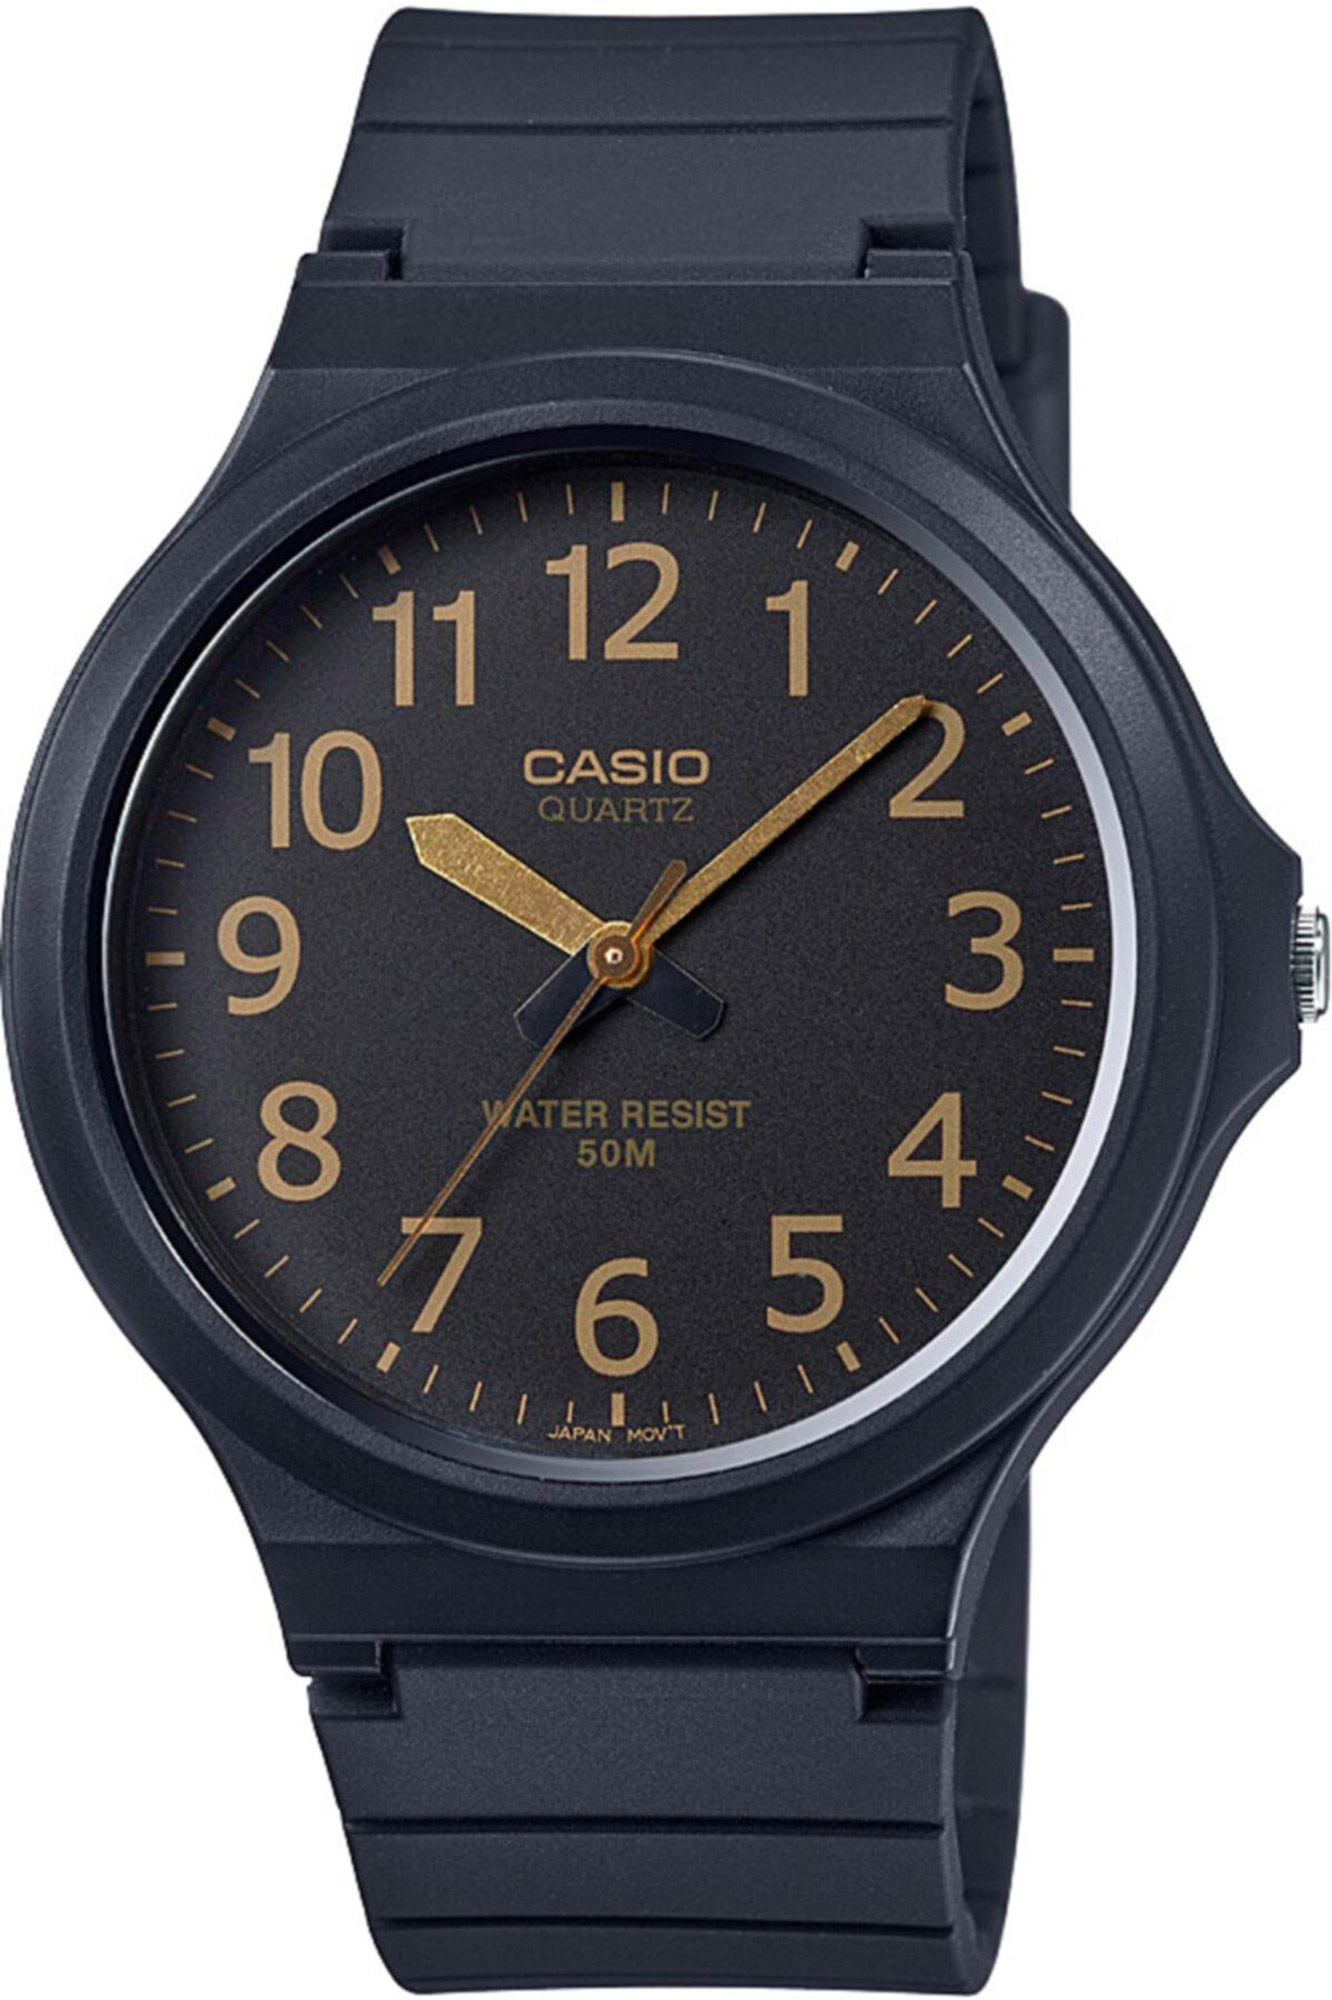 Watch CASIO Collection mw-240-1b2